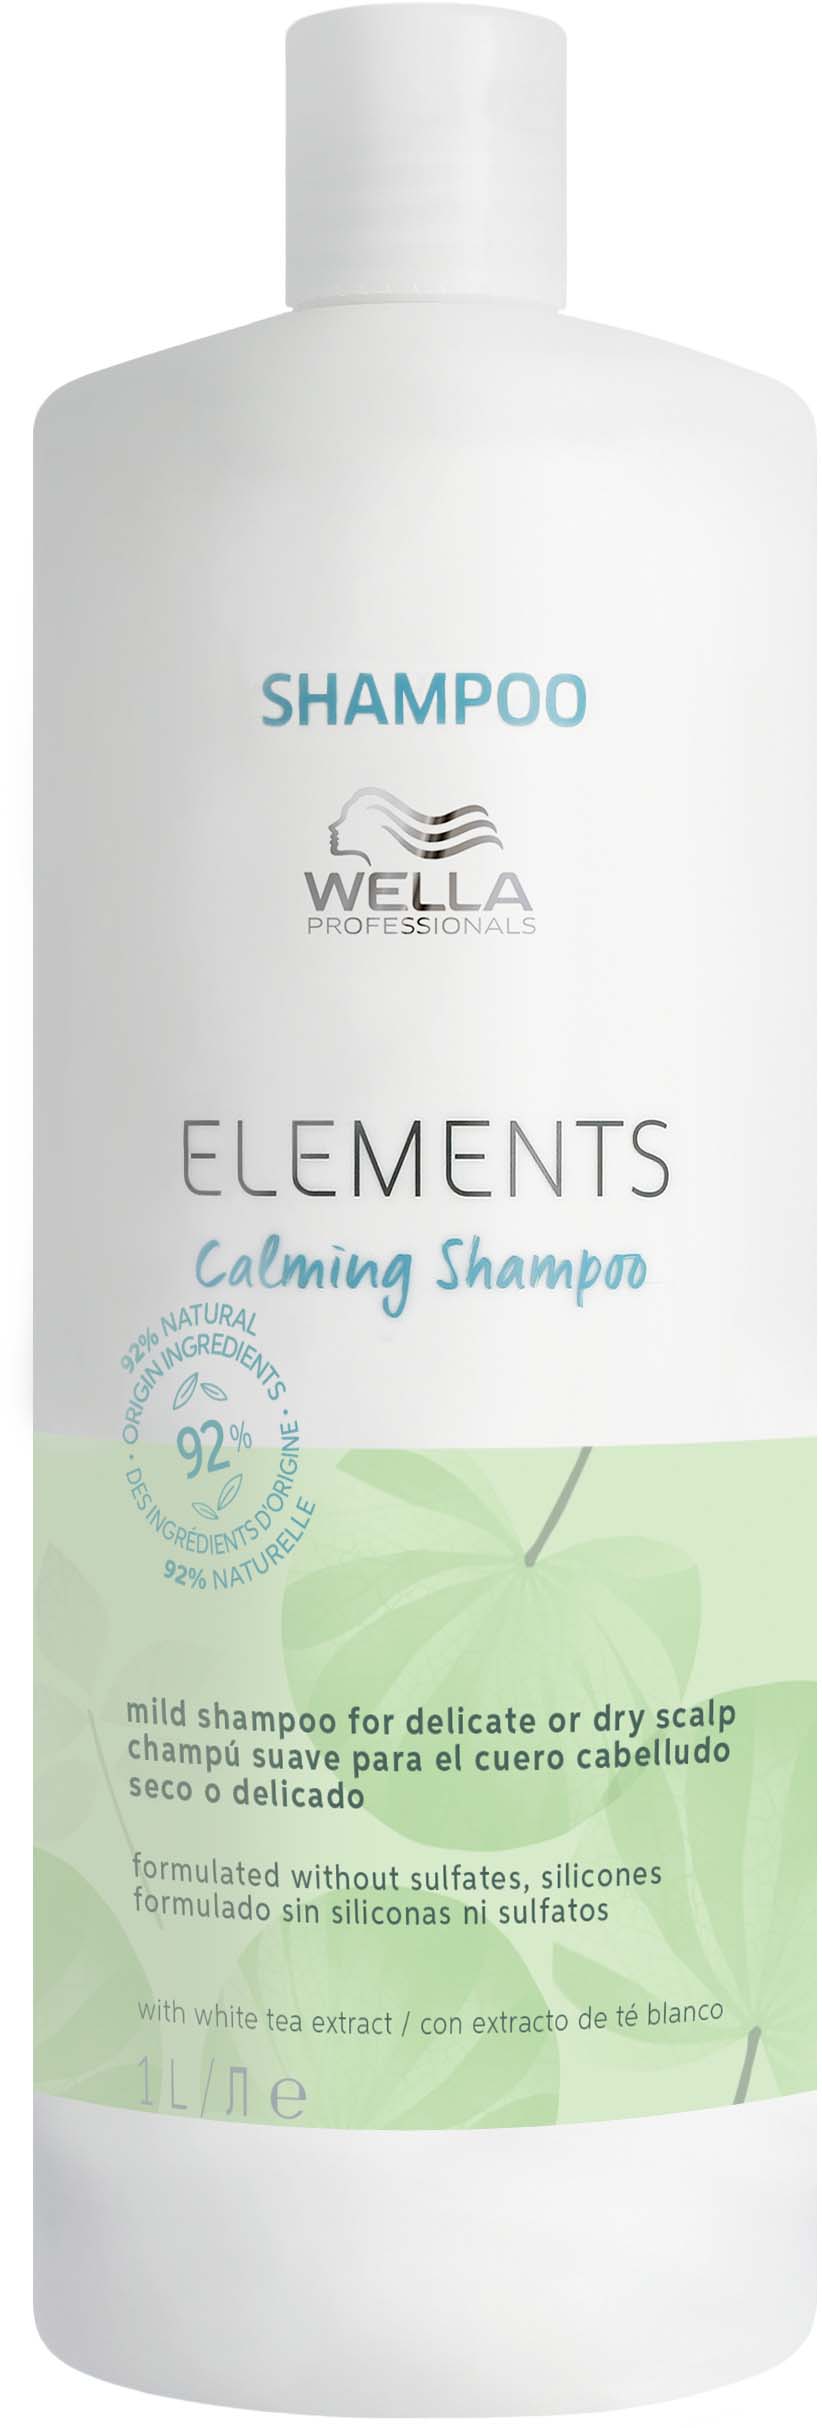 Champú Elements Renewing Shampoo Sin Sulfatos Wella 500ml.